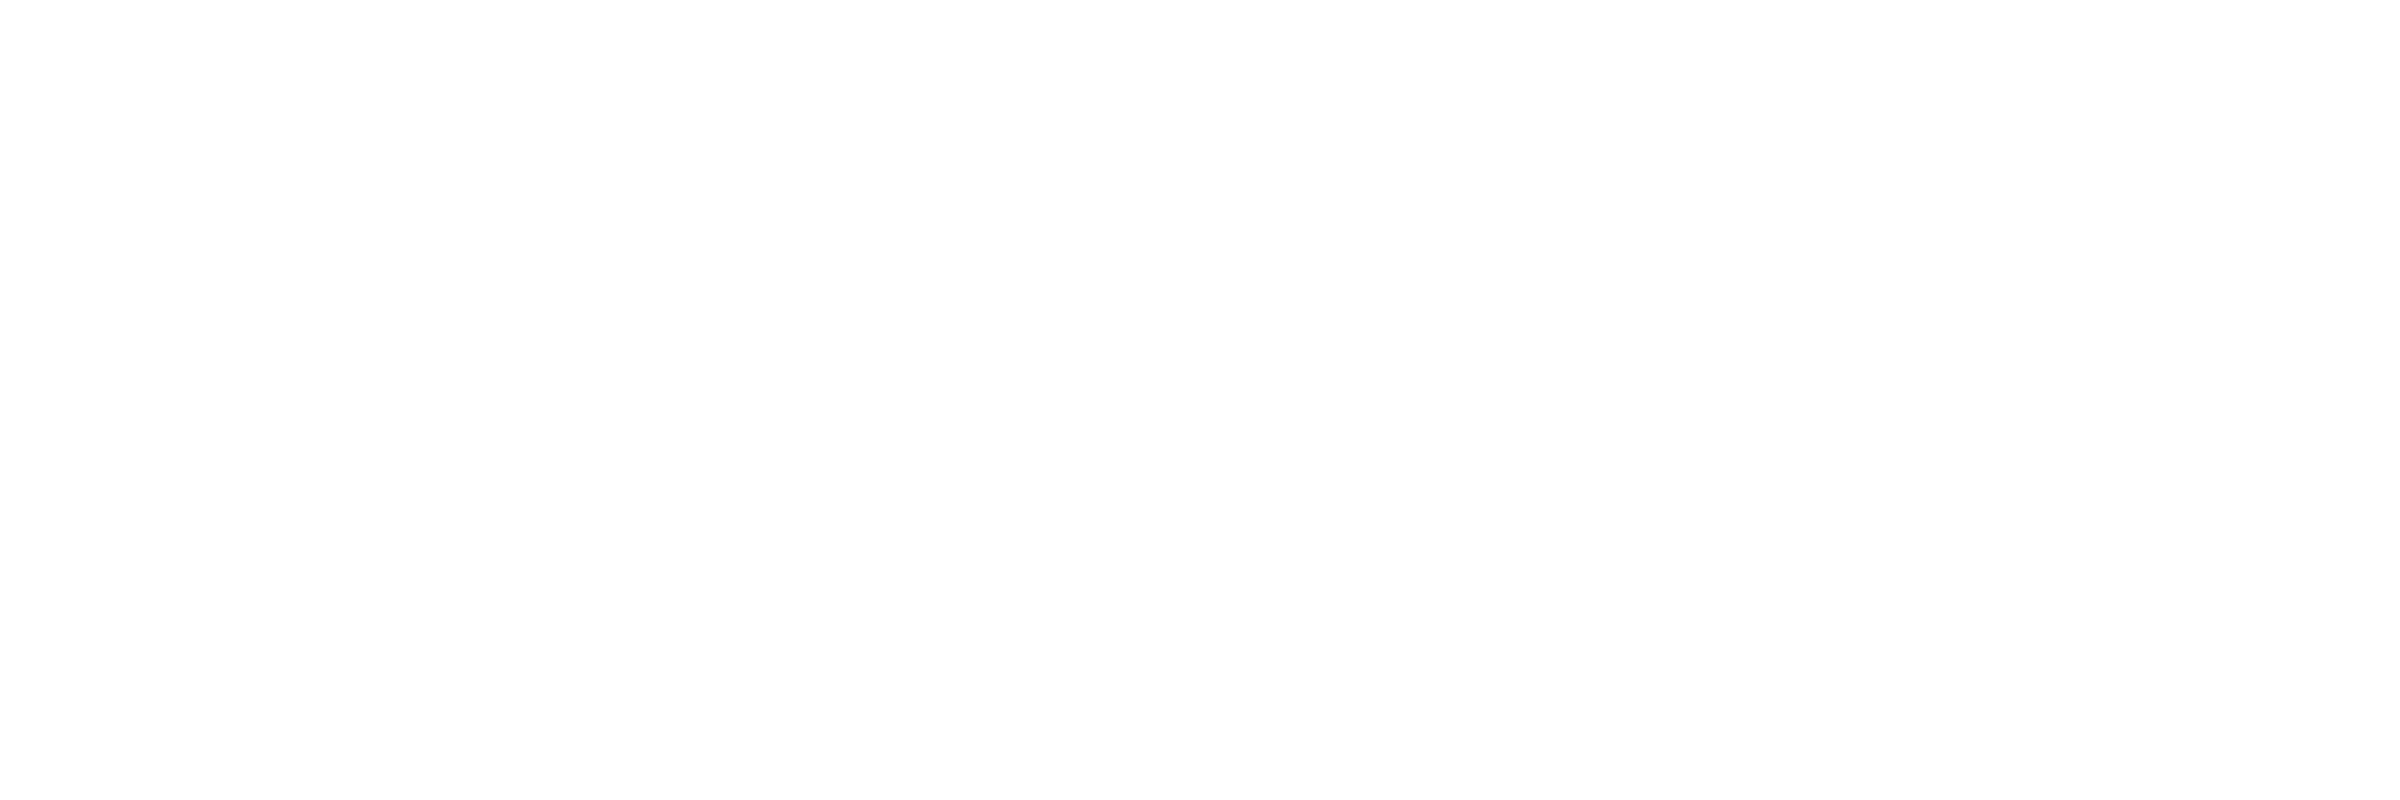 Pov Schoolgirl Creampie - bodyright - Own your body online | Bodily Integrity | UNFPA